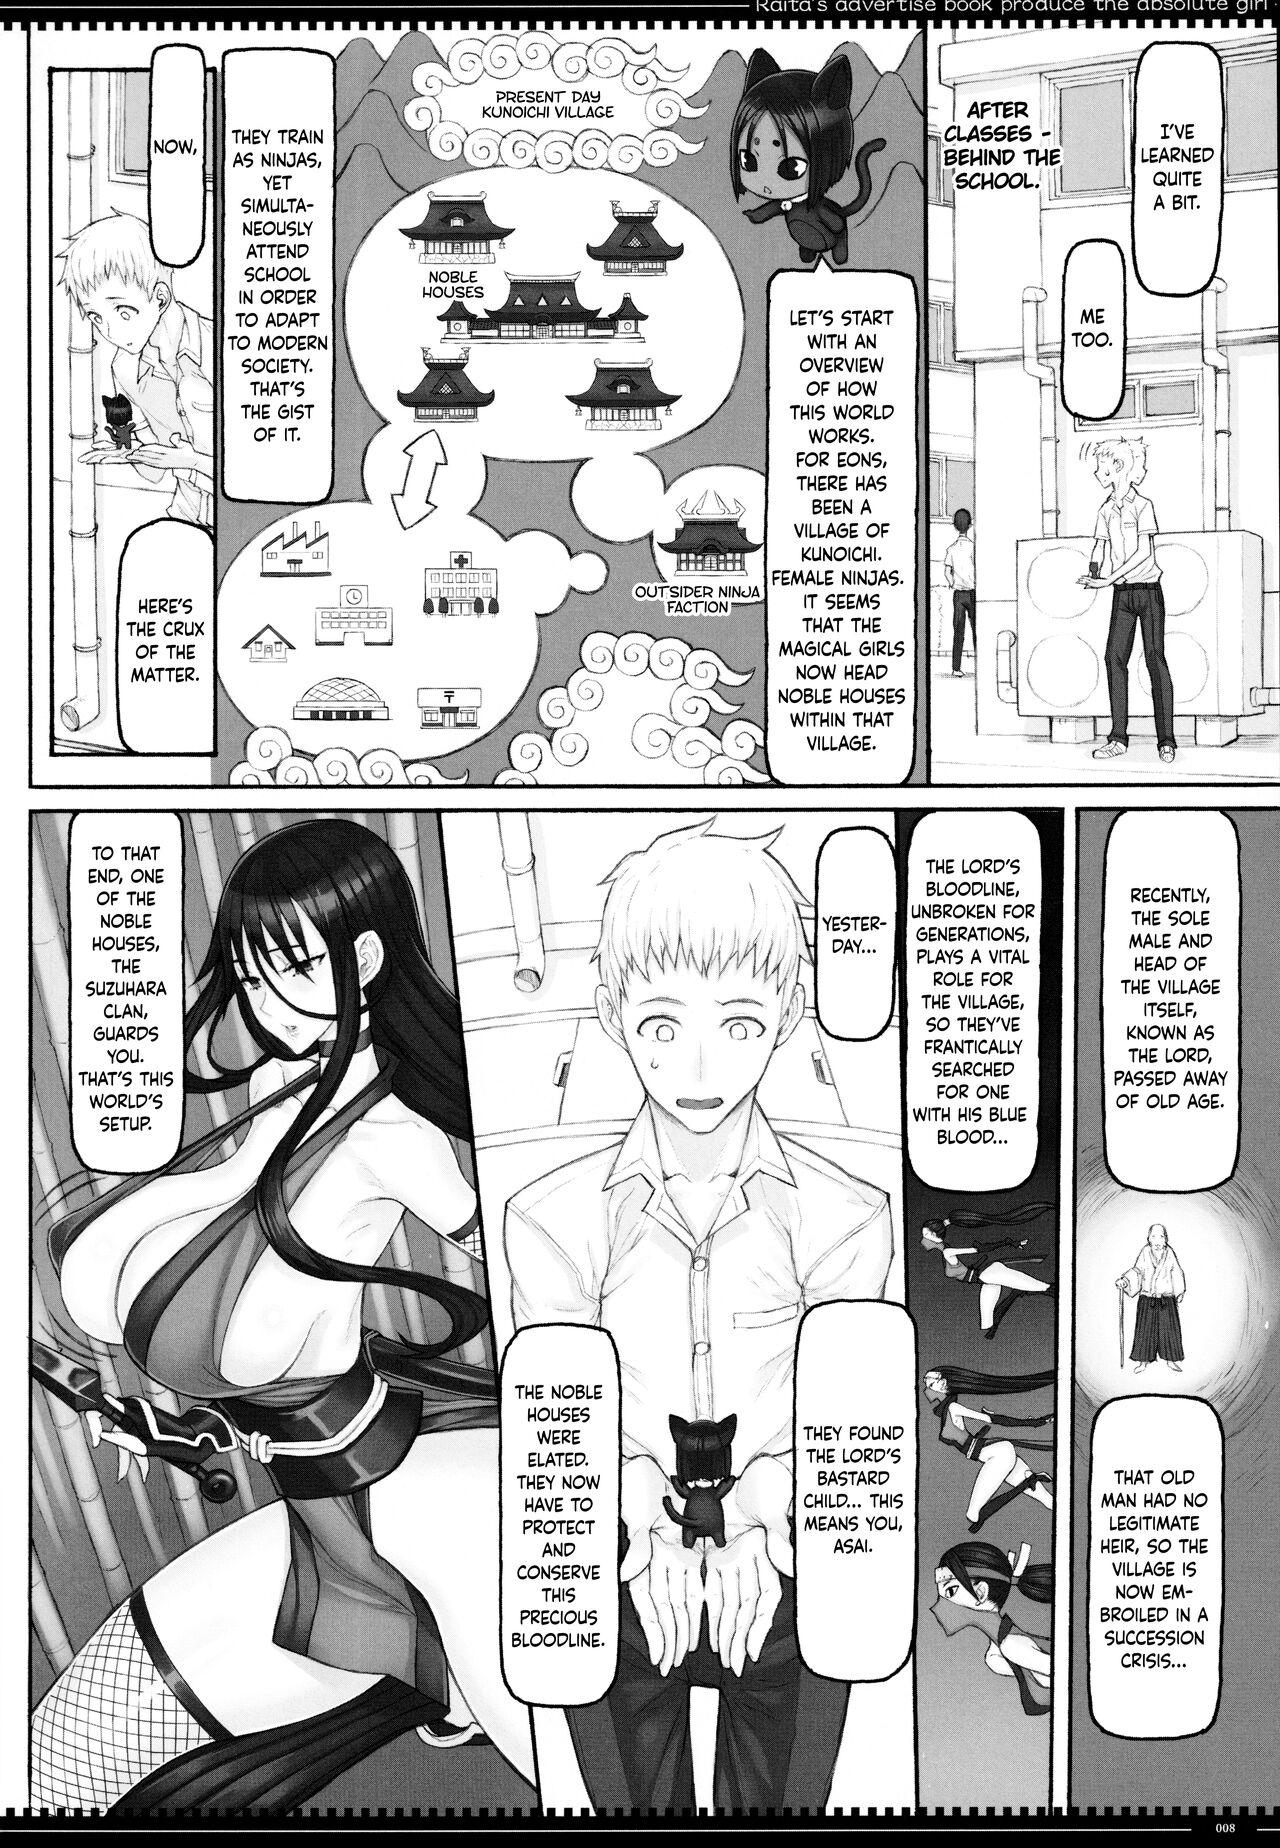 Secret Mahou Shoujo 21.0 - Zettai junpaku mahou shoujo Imvu - Page 7